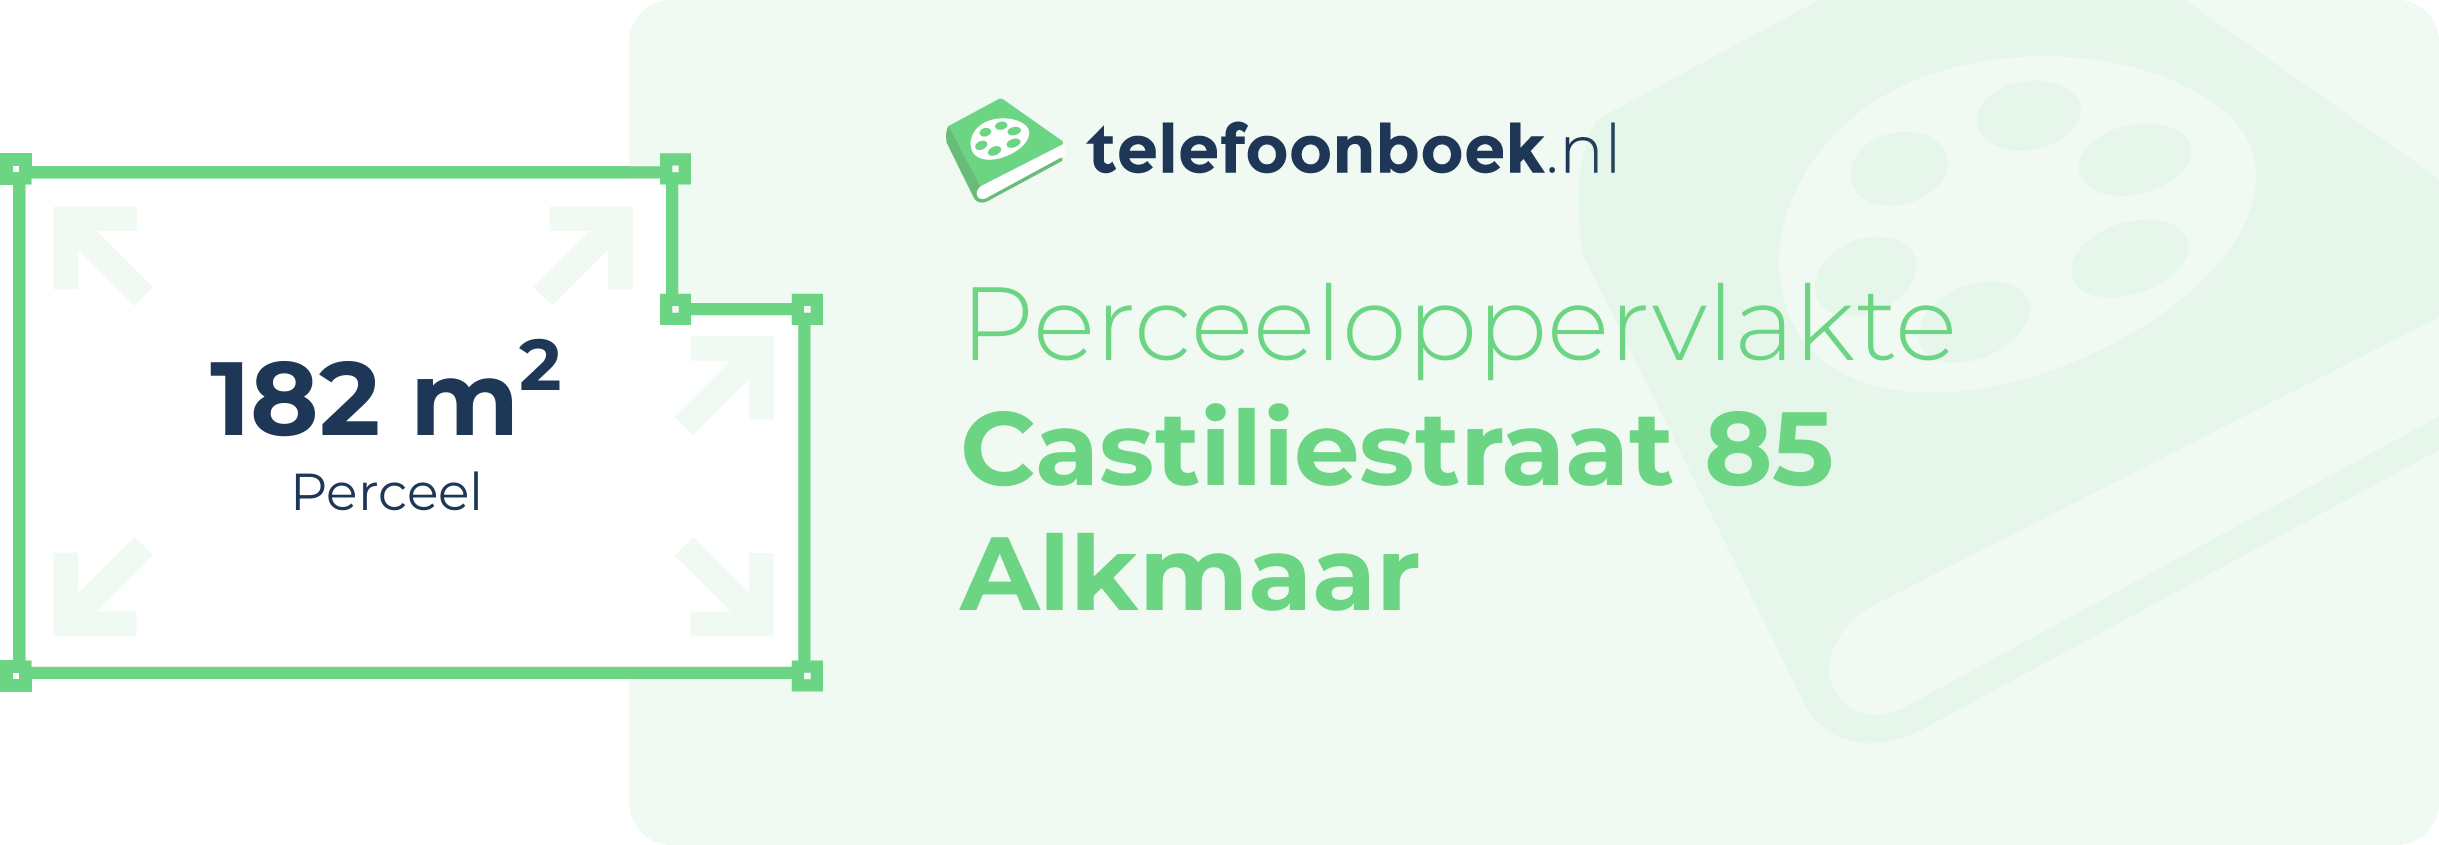 Perceeloppervlakte Castiliestraat 85 Alkmaar